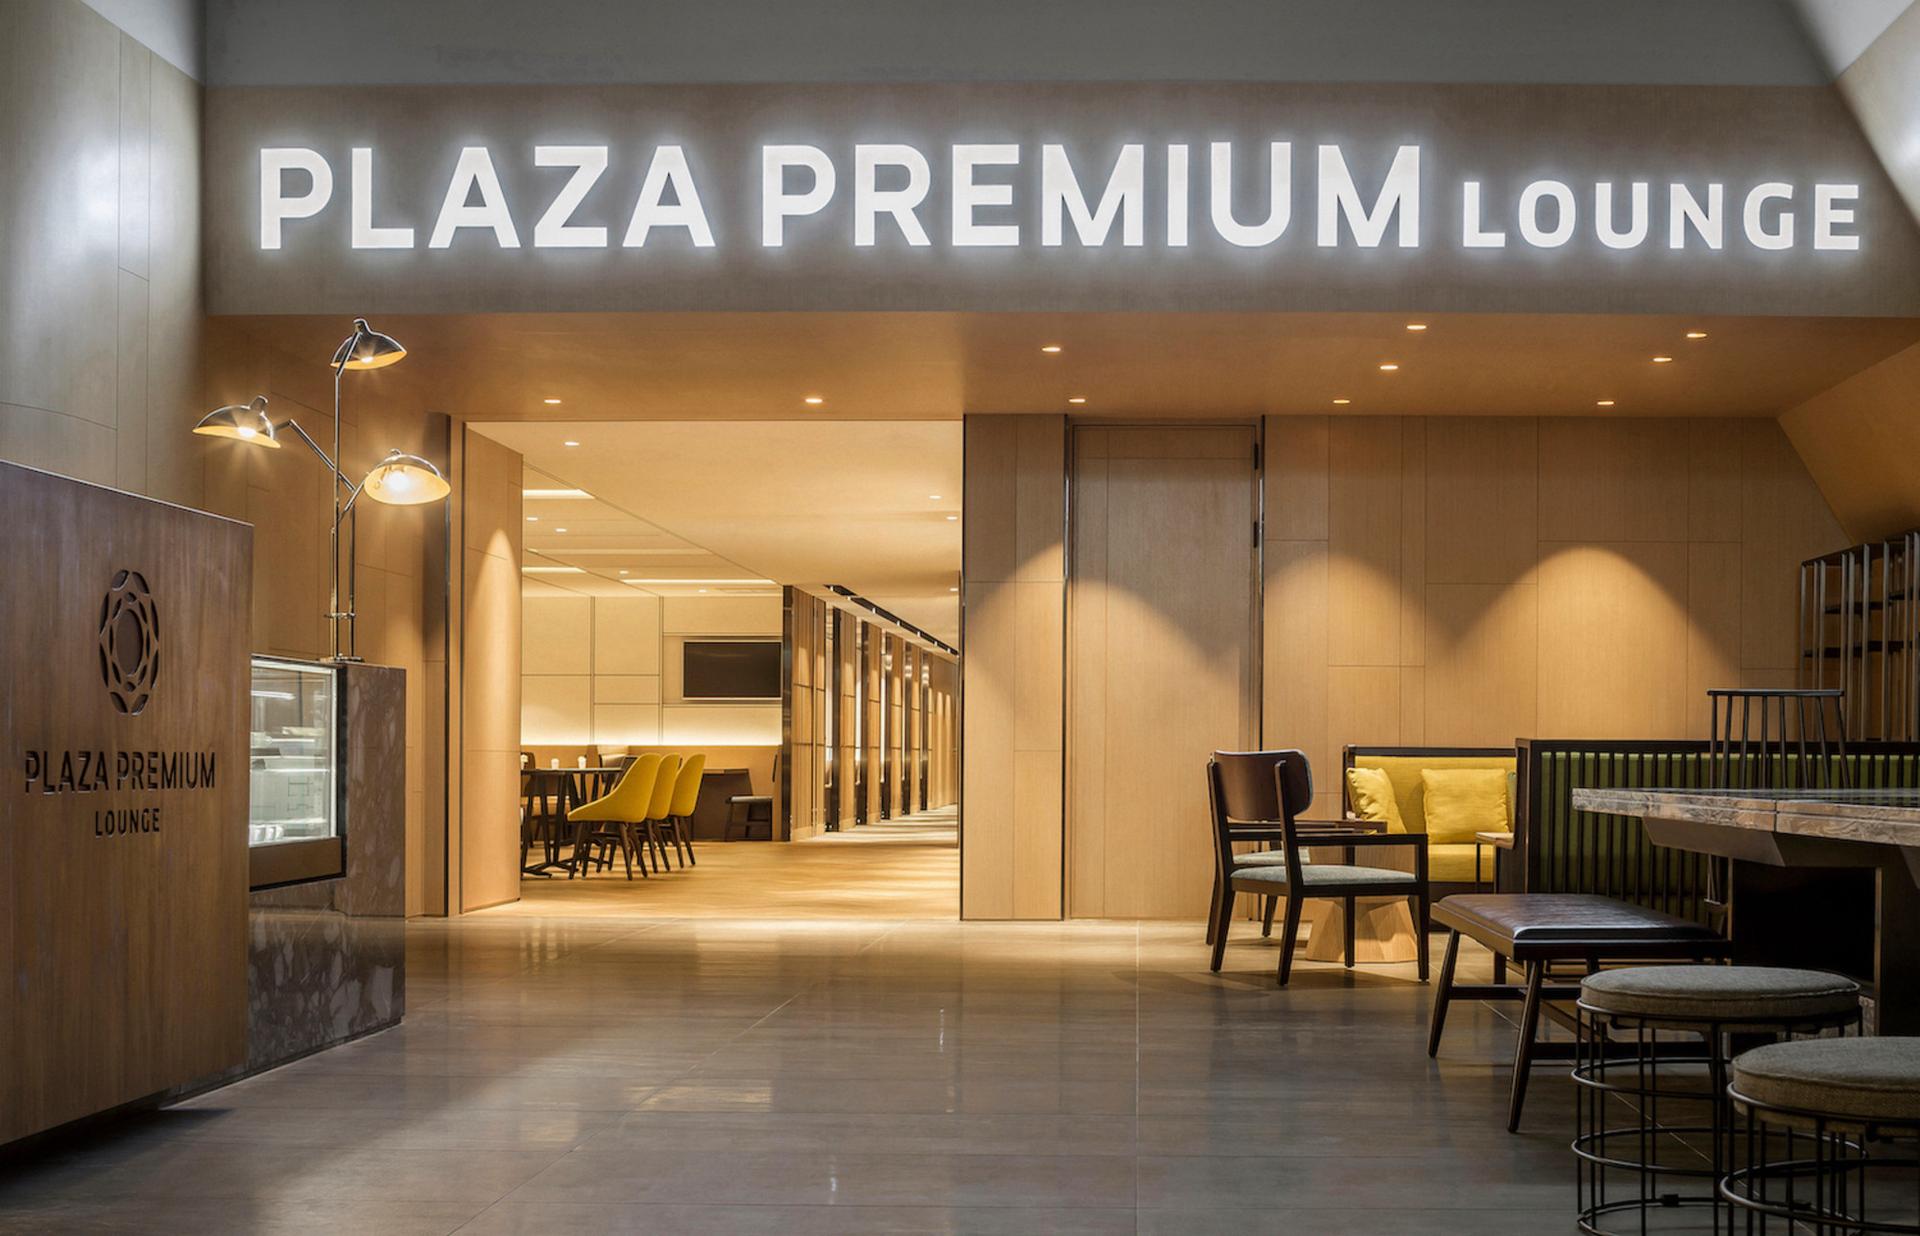 Plaza Premium Lounge (Zone A) image 60 of 79